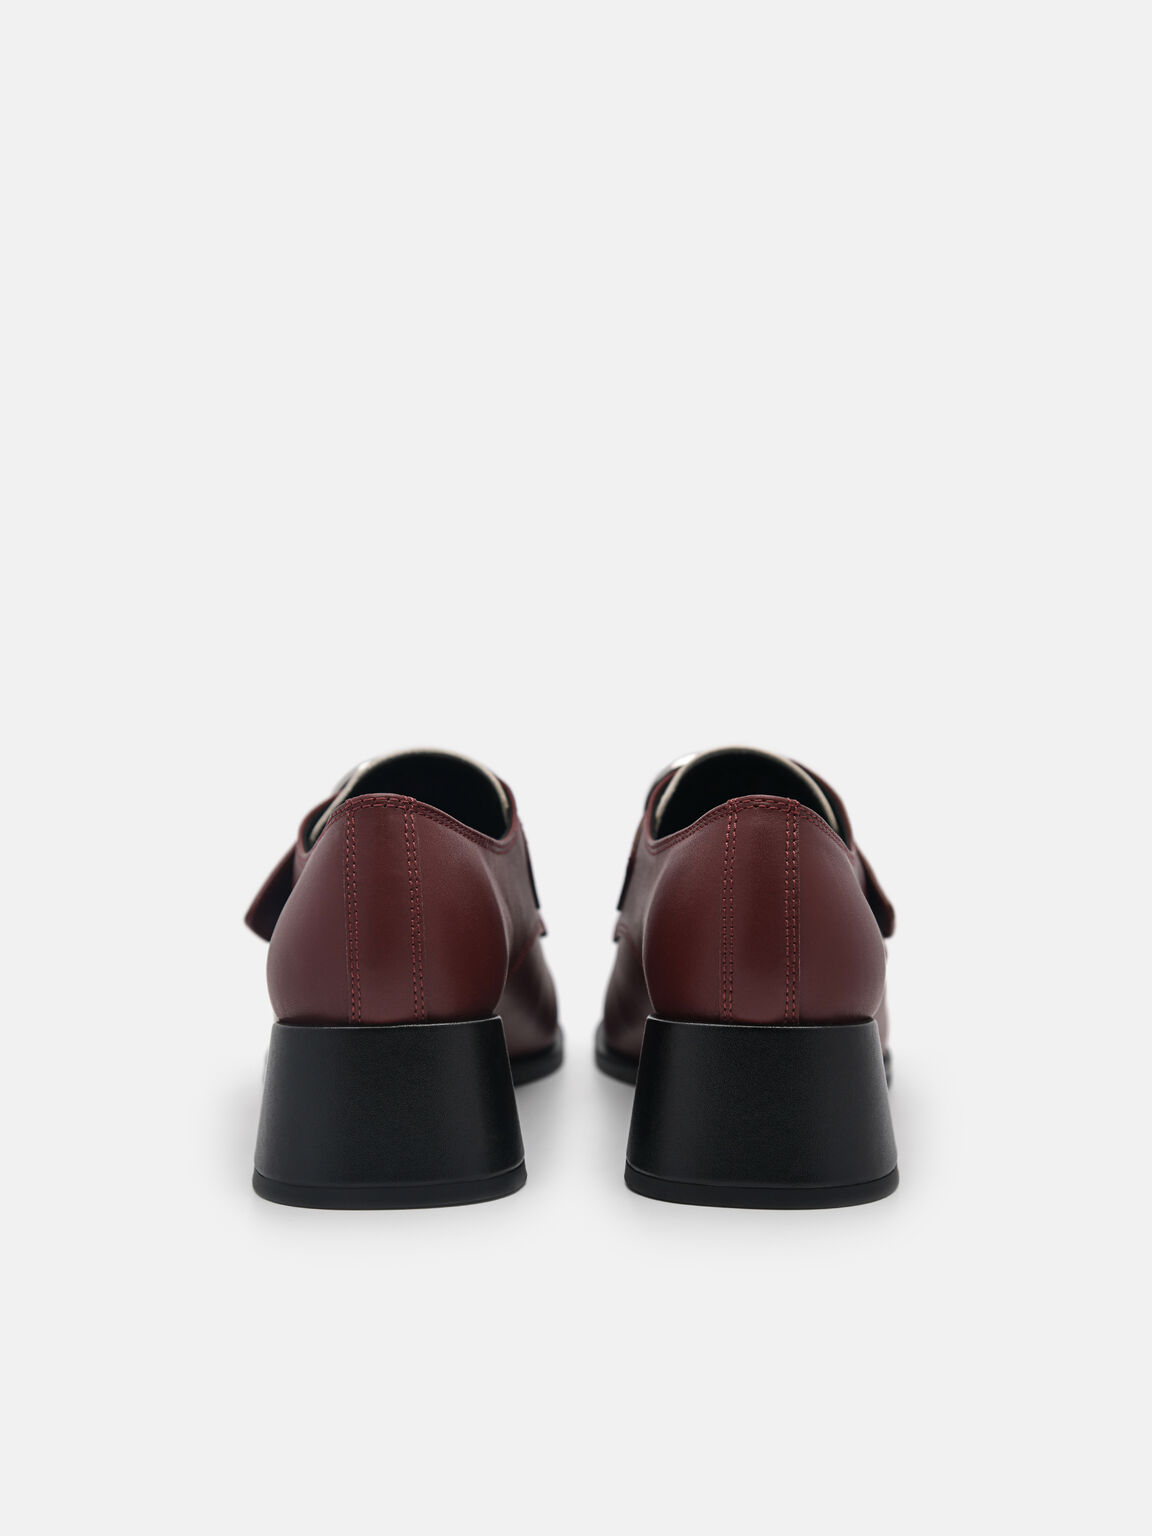 Eden Leather Heel Loafers, Multi